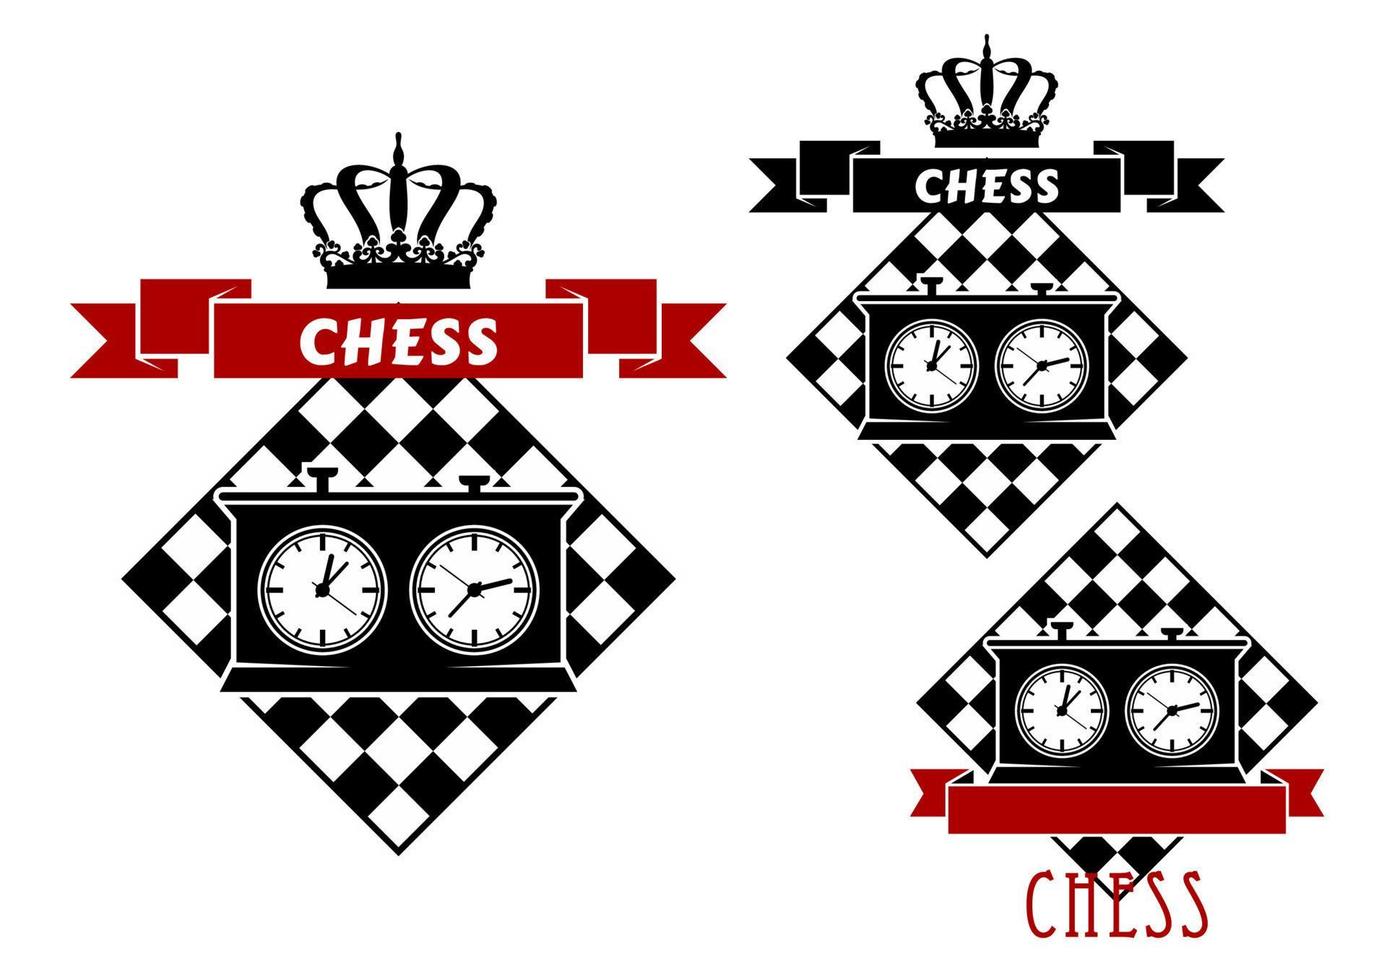 símbolos de xadrez com relógios no tabuleiro de xadrez vetor